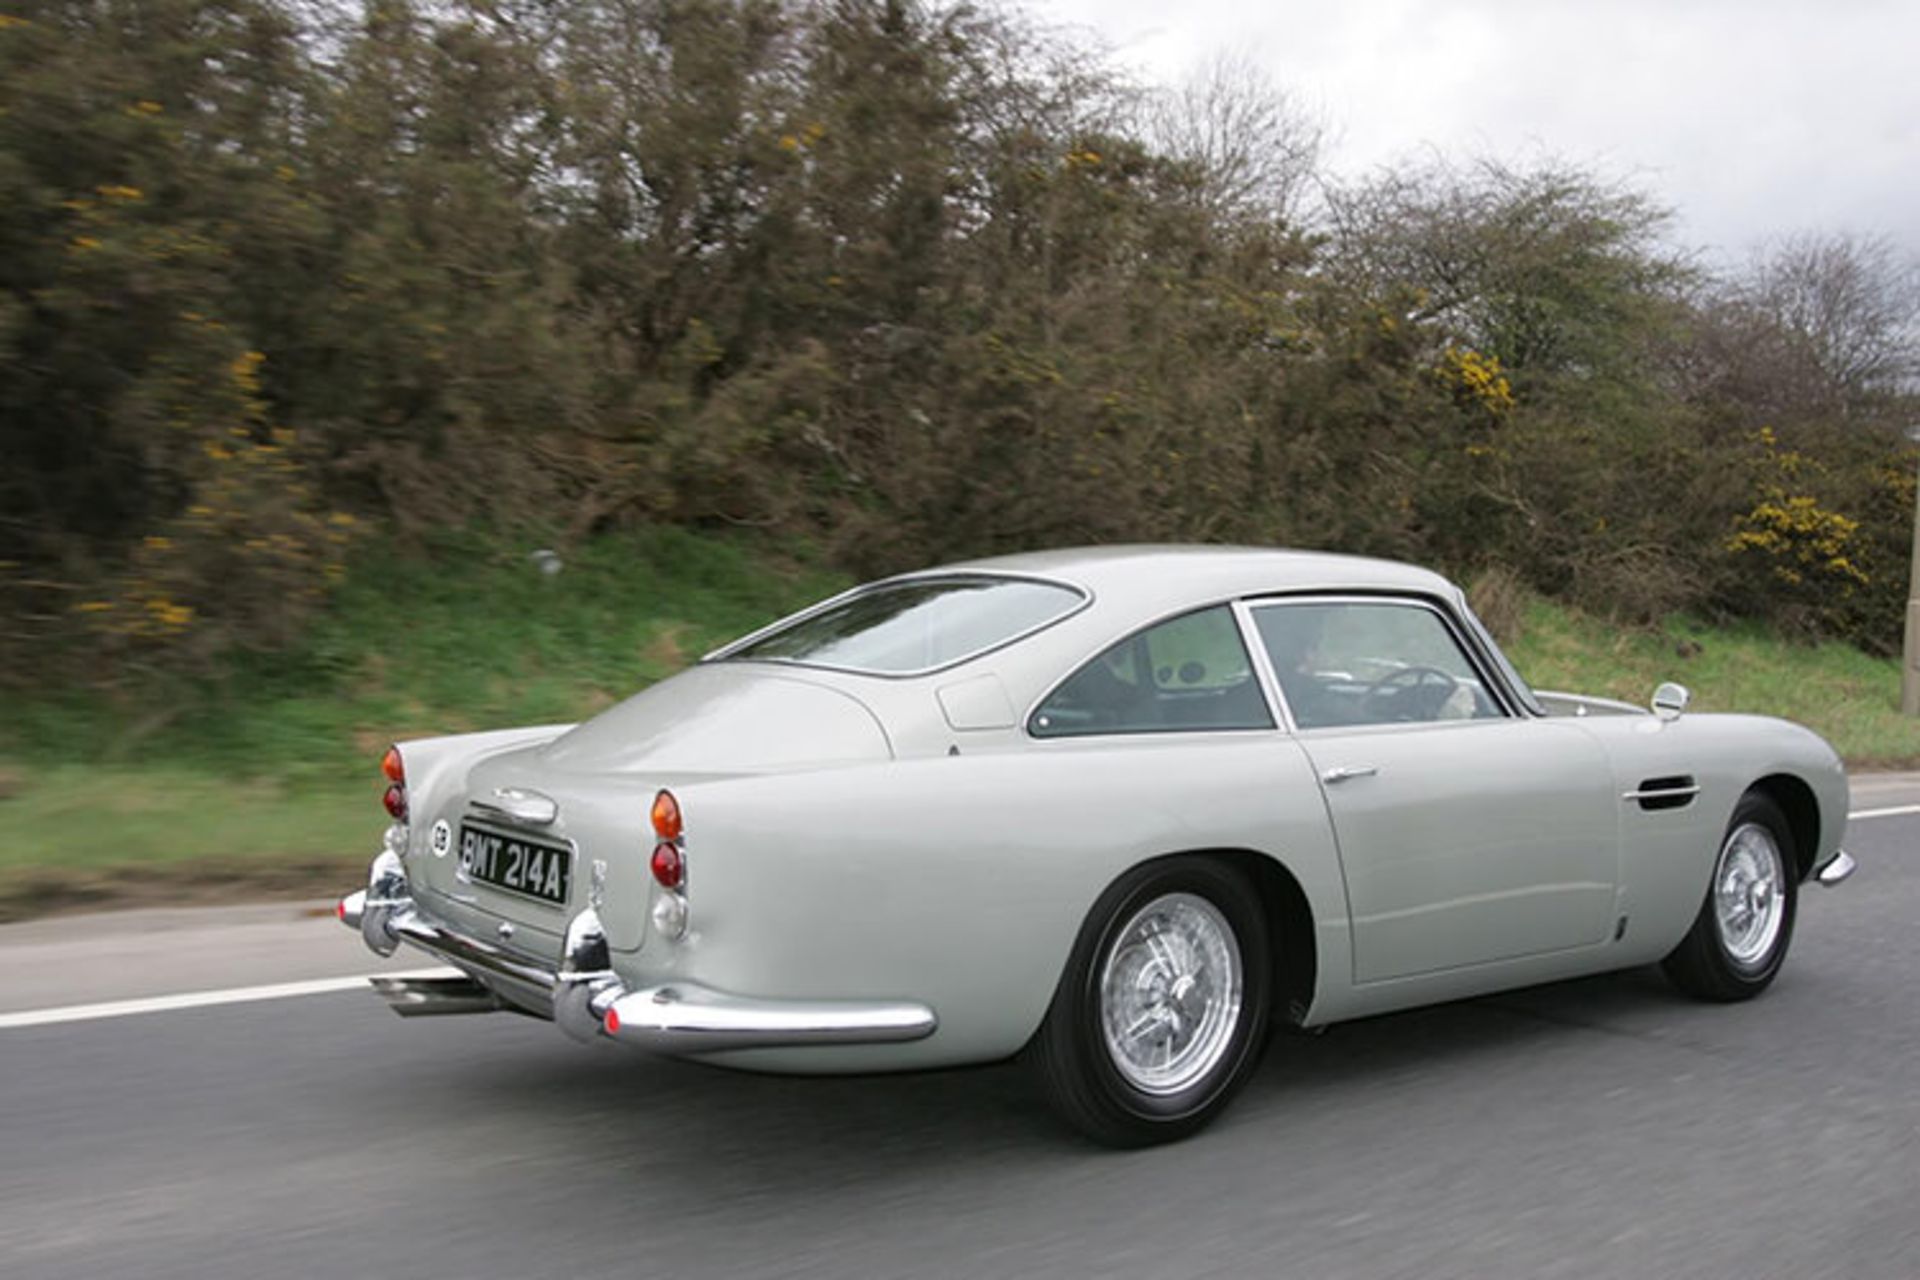 James Bond 007 Aston Martin DB5 / خودروی کلاسیک استون مارتین DB5 جیمز باند 007